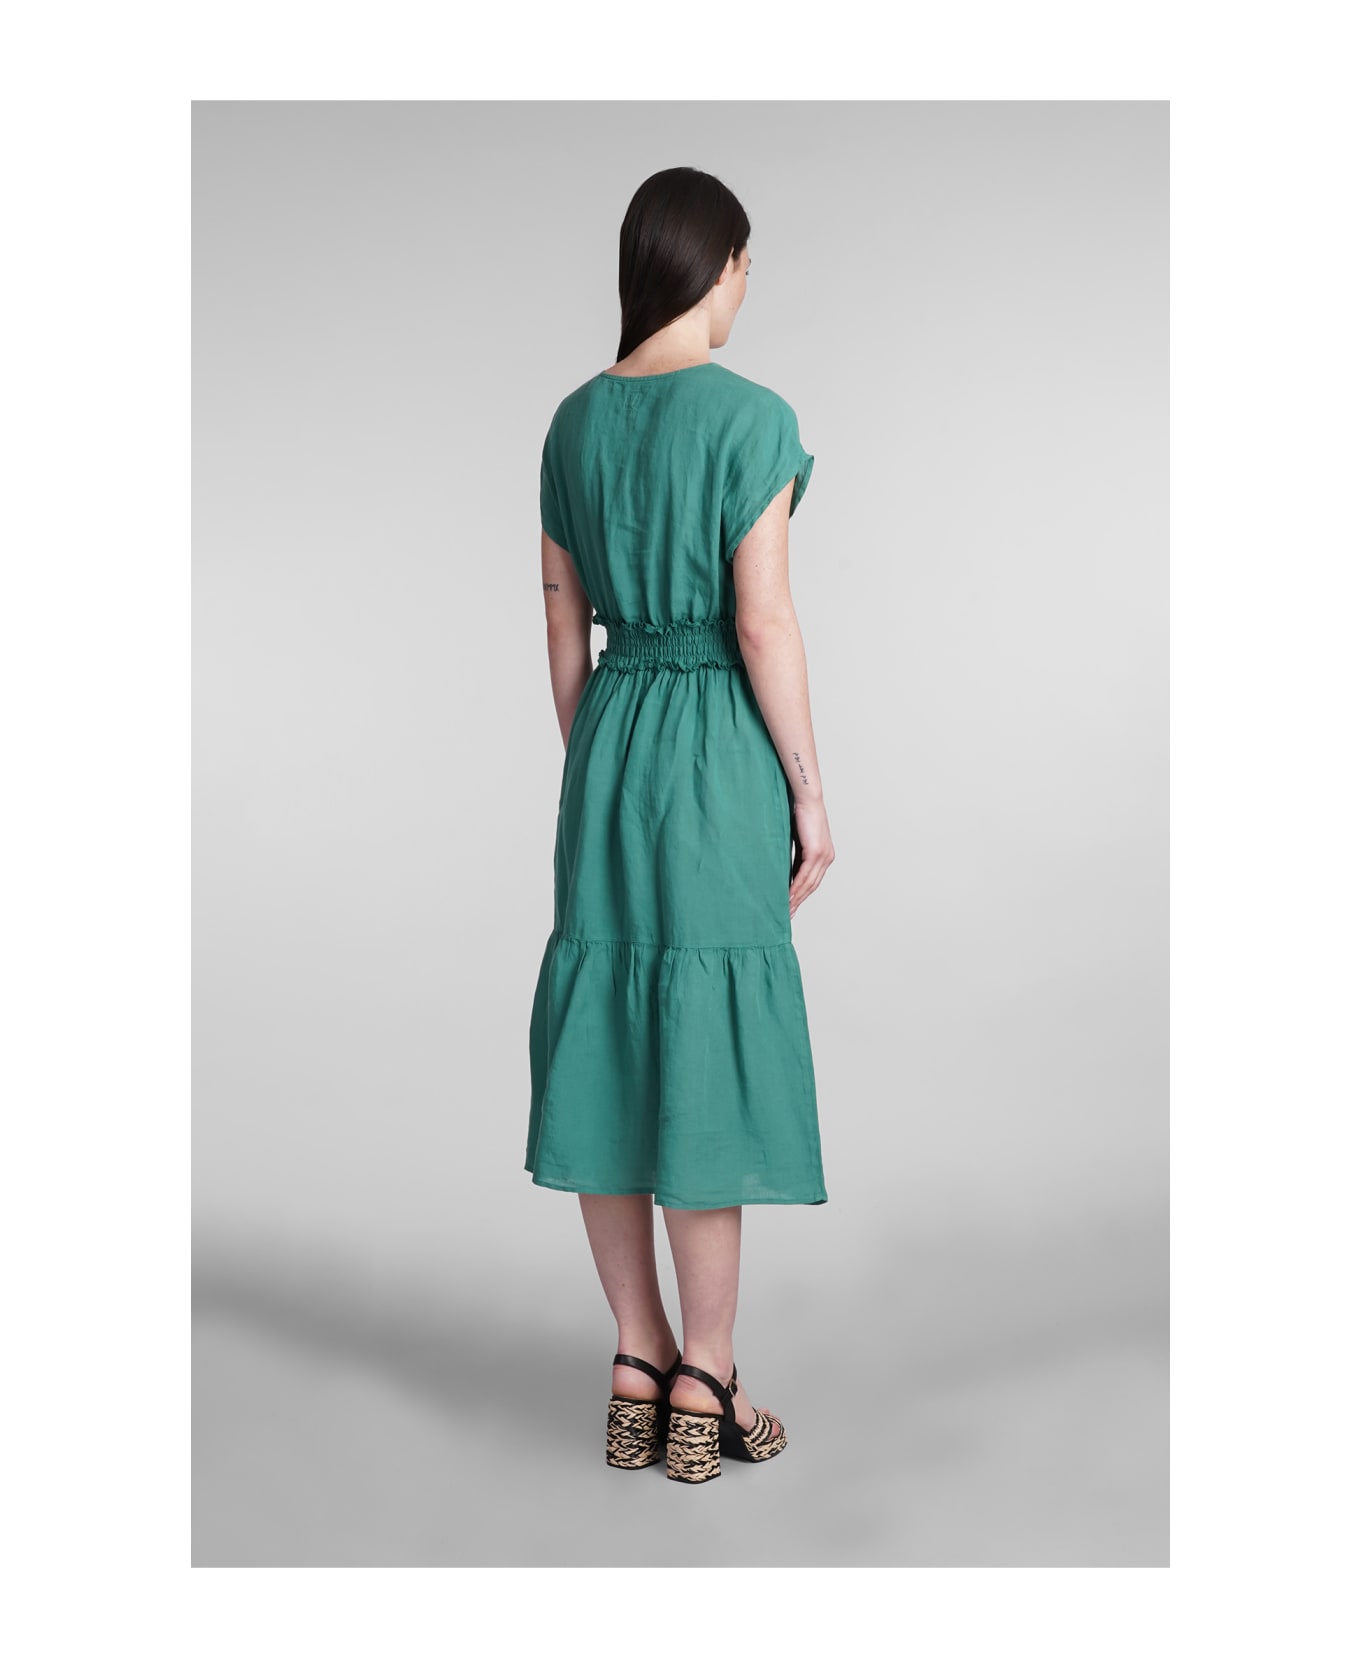 120% Lino Dress In Green Linen - green